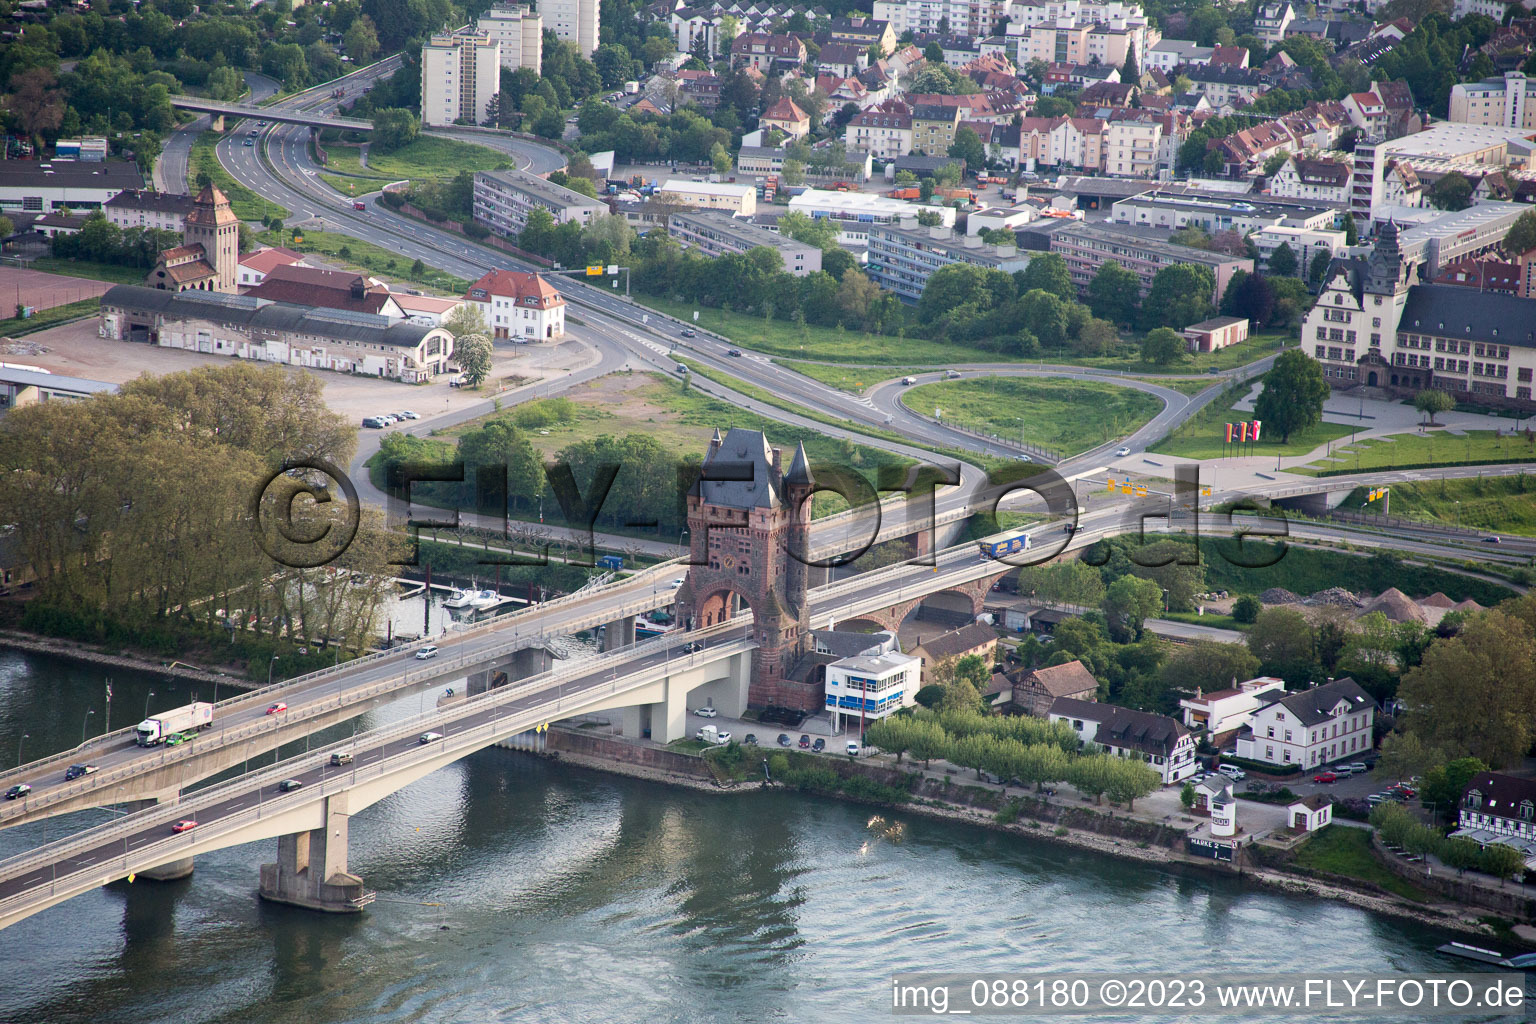 Nibelungen Bridge in Worms in the state Rhineland-Palatinate, Germany